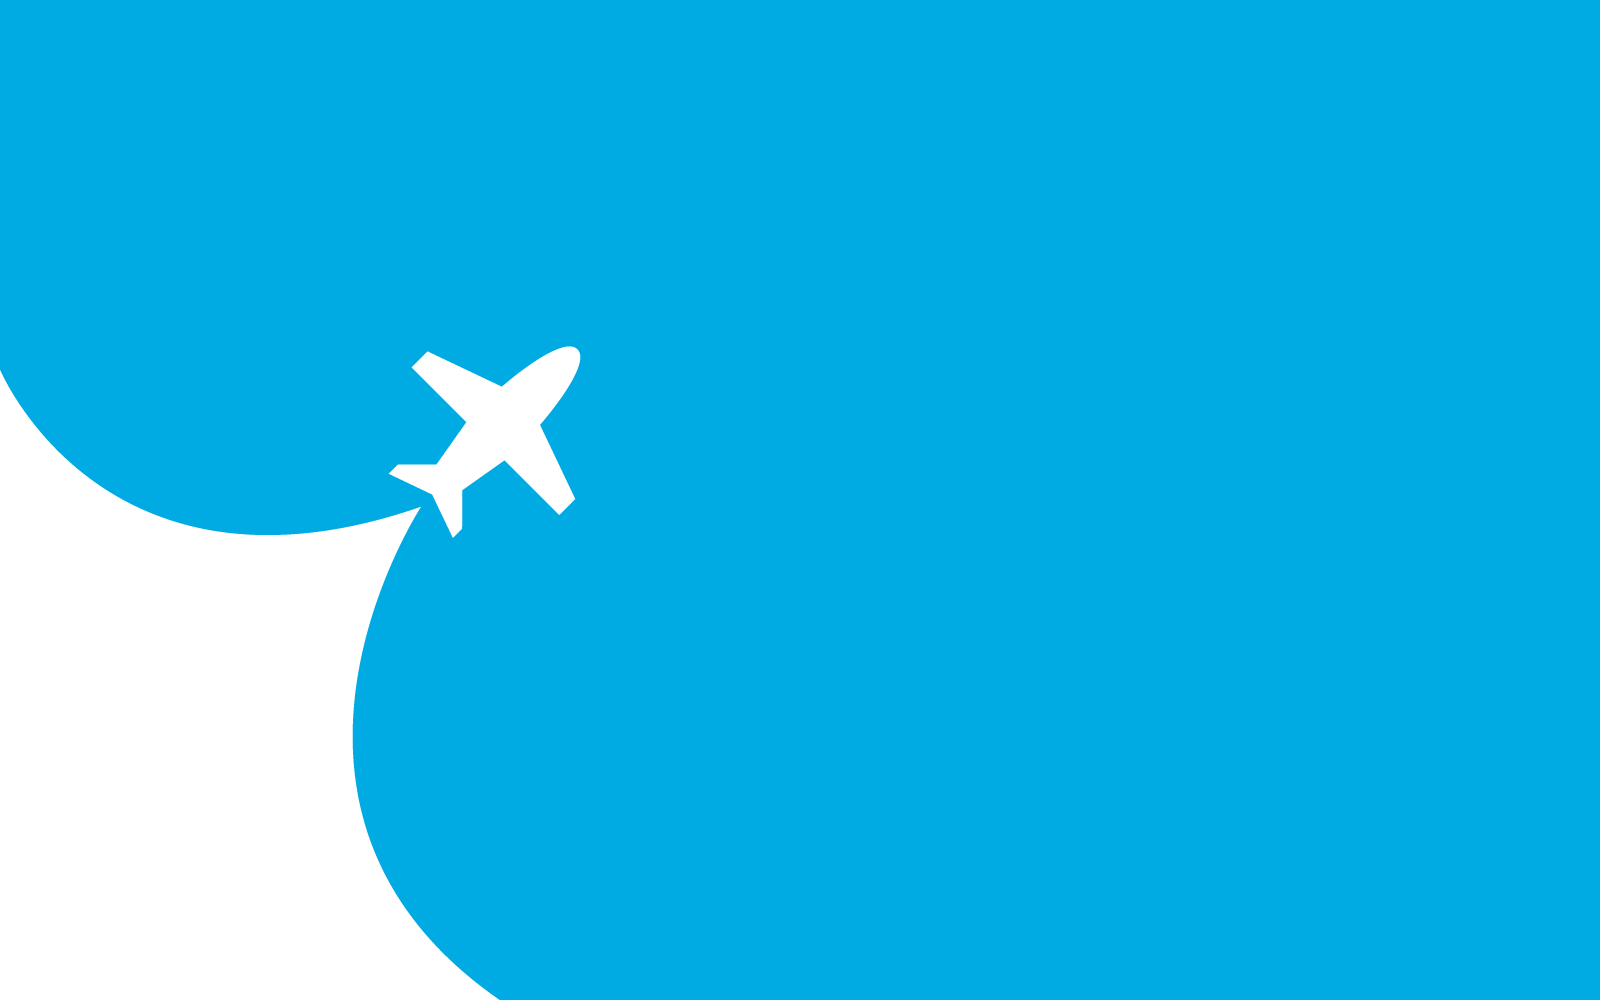 Air Plane illustration logo on blue background vector template